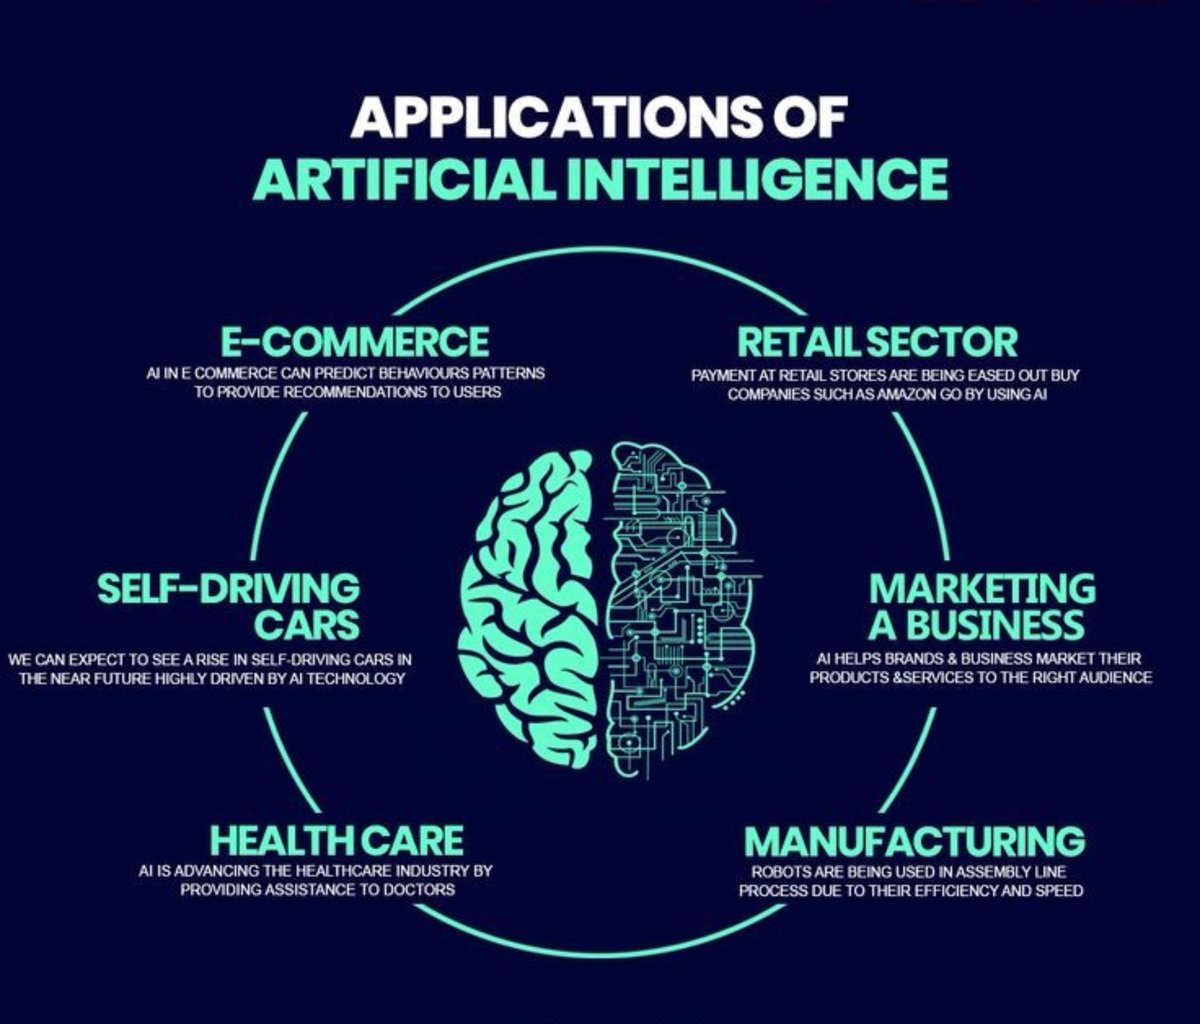 #Infographic: Application of Artificial Intelligence! via @ingliguori #AI #ML #DL #MachineLearning #ArtificialIntelligence #DeepLearning #Technology #Innovation #DataScience #TechTrends #AINow #Technology #EmergingTech CC: @Ronald_vanLoon @lindagrass0 @mvollmer1